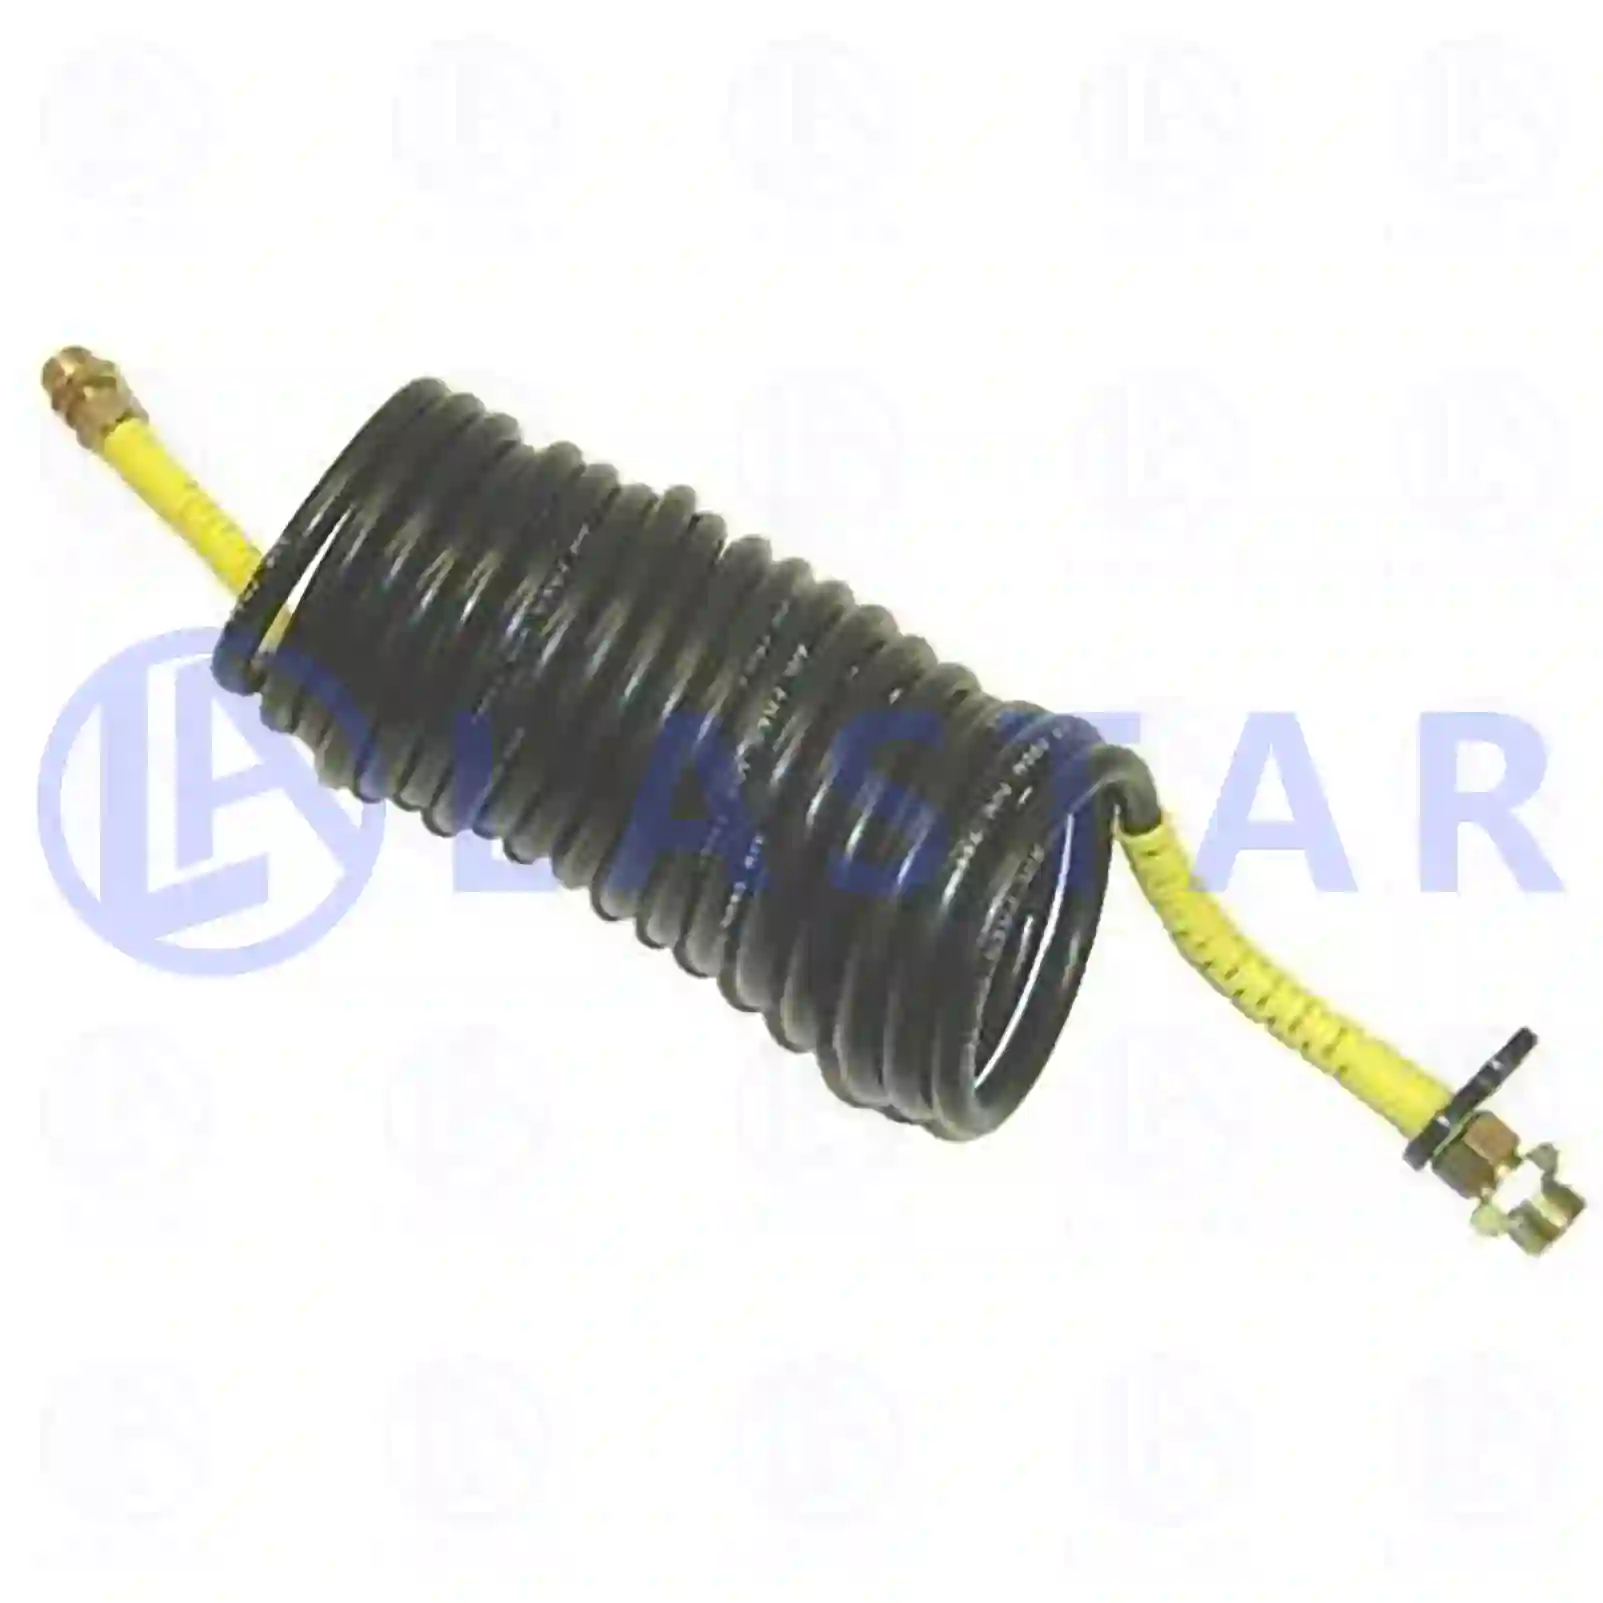 Cable Spiral Air spiral, la no: 77710184 ,  oem no:1518047, 33009609, 81963400238, , Lastar Spare Part | Truck Spare Parts, Auotomotive Spare Parts